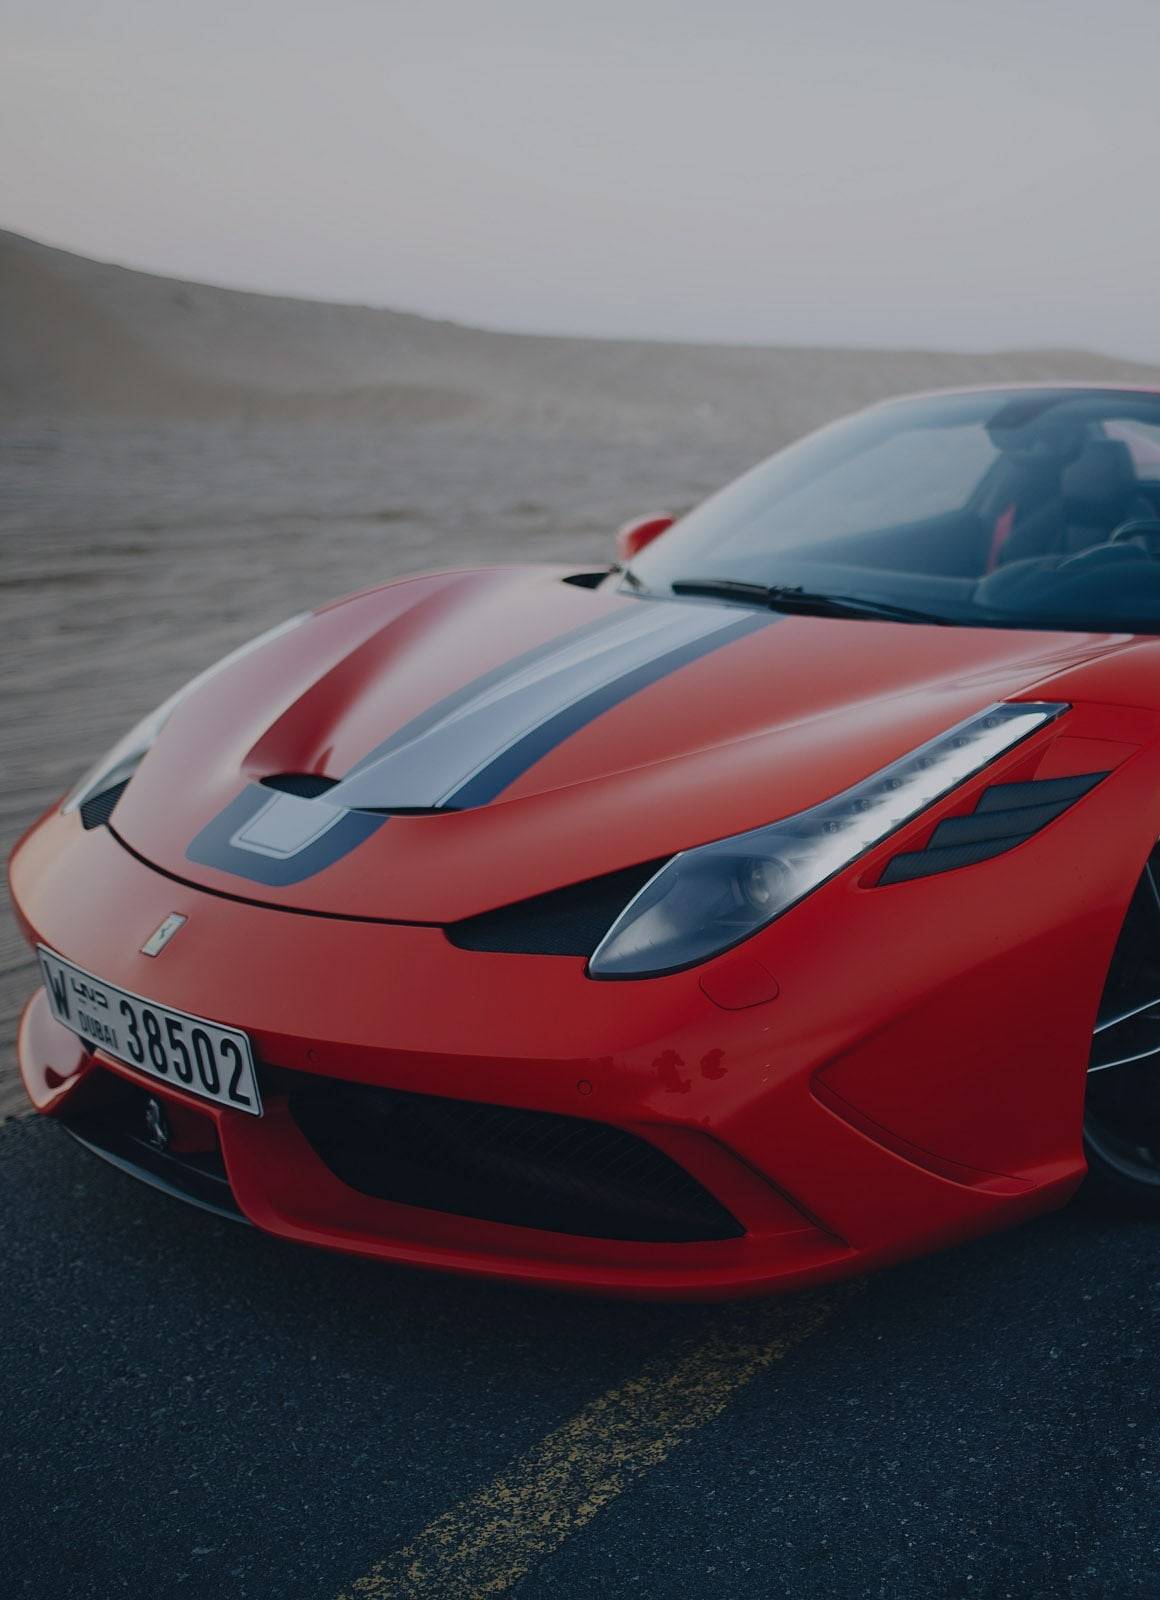 Get an instant Ferrari car insurance quote online